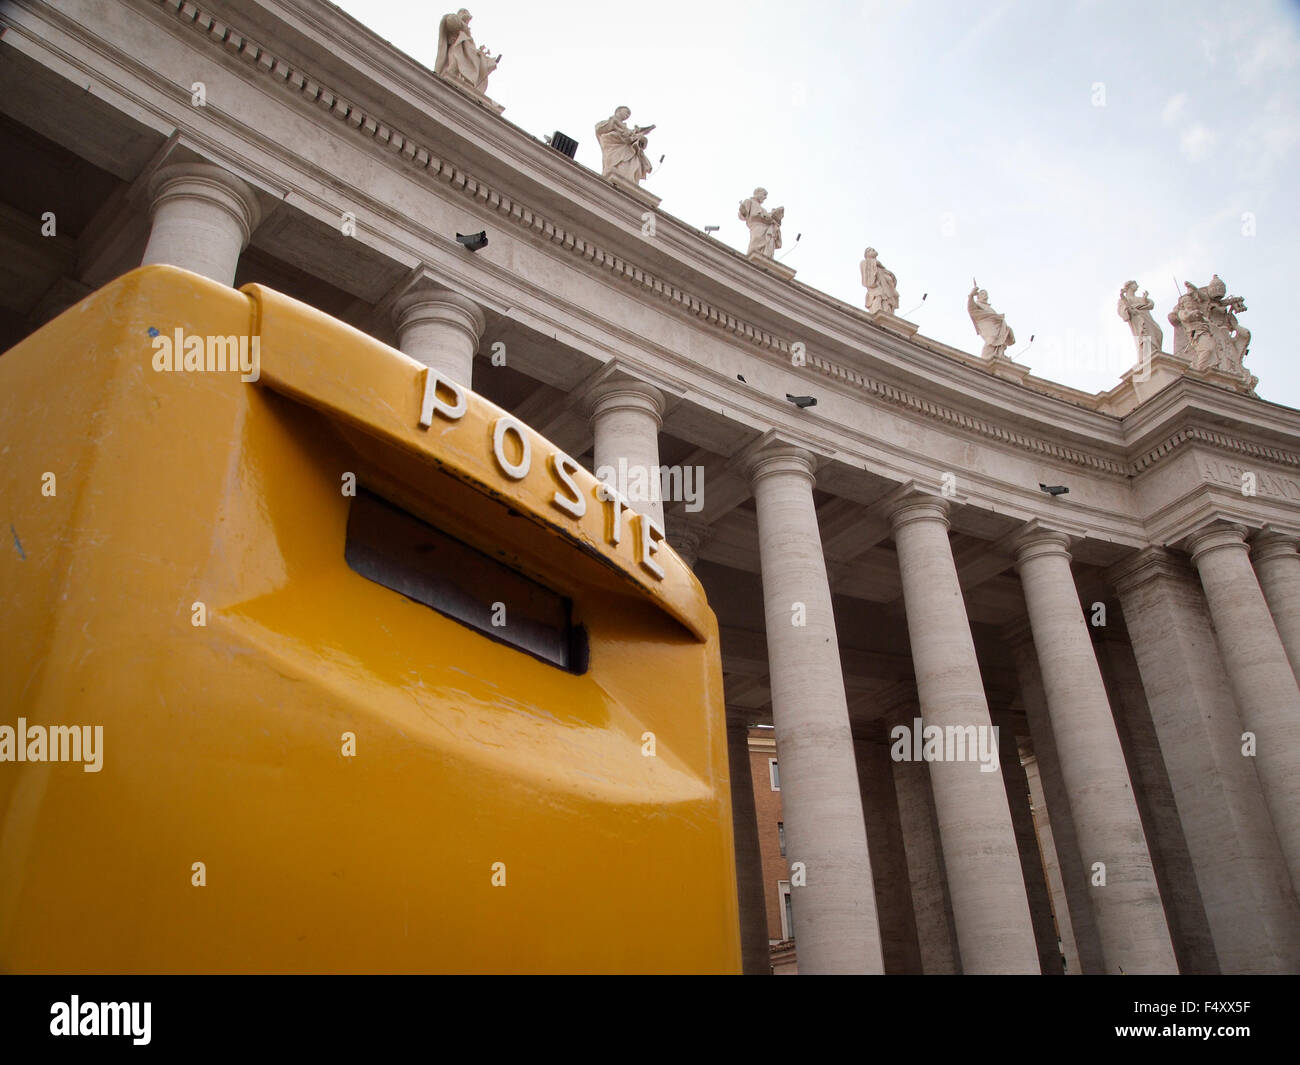 Postfach Poste Vaticane, den Postdienst souveränen Vatikanstadt, vor der der Basilika St. Peter im Vatikan, Rom. Stockfoto